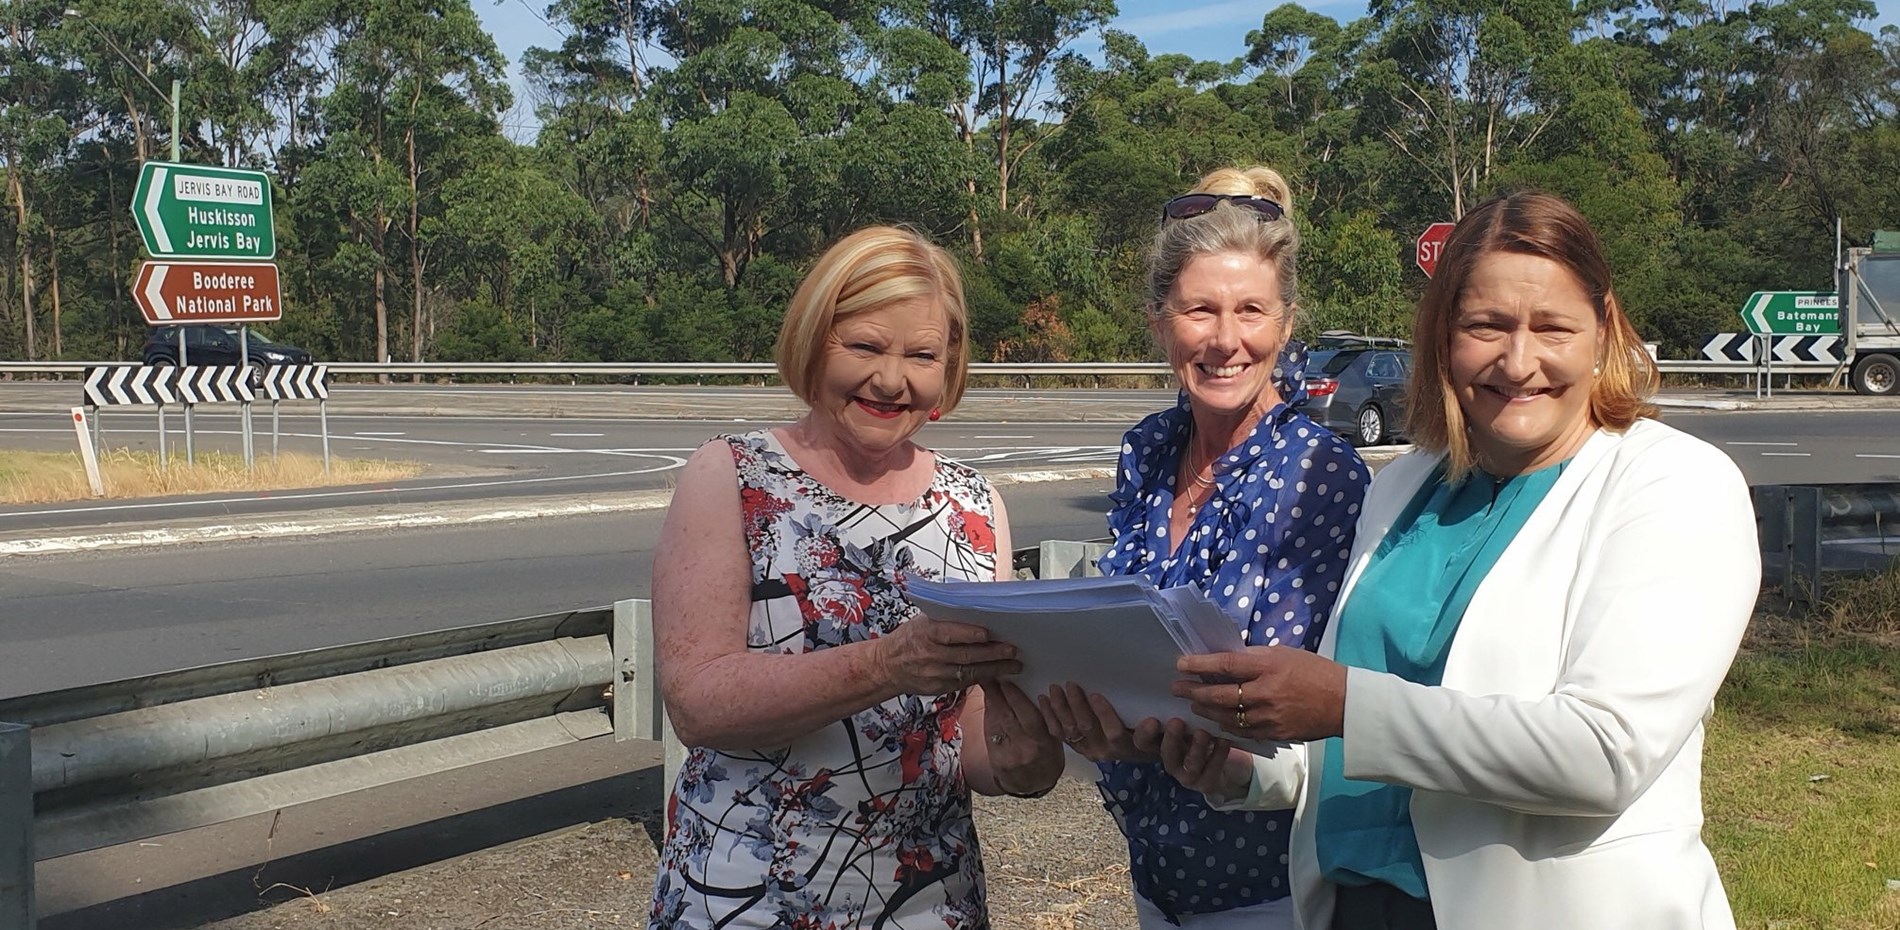 Speech: NSW Roads Main Image